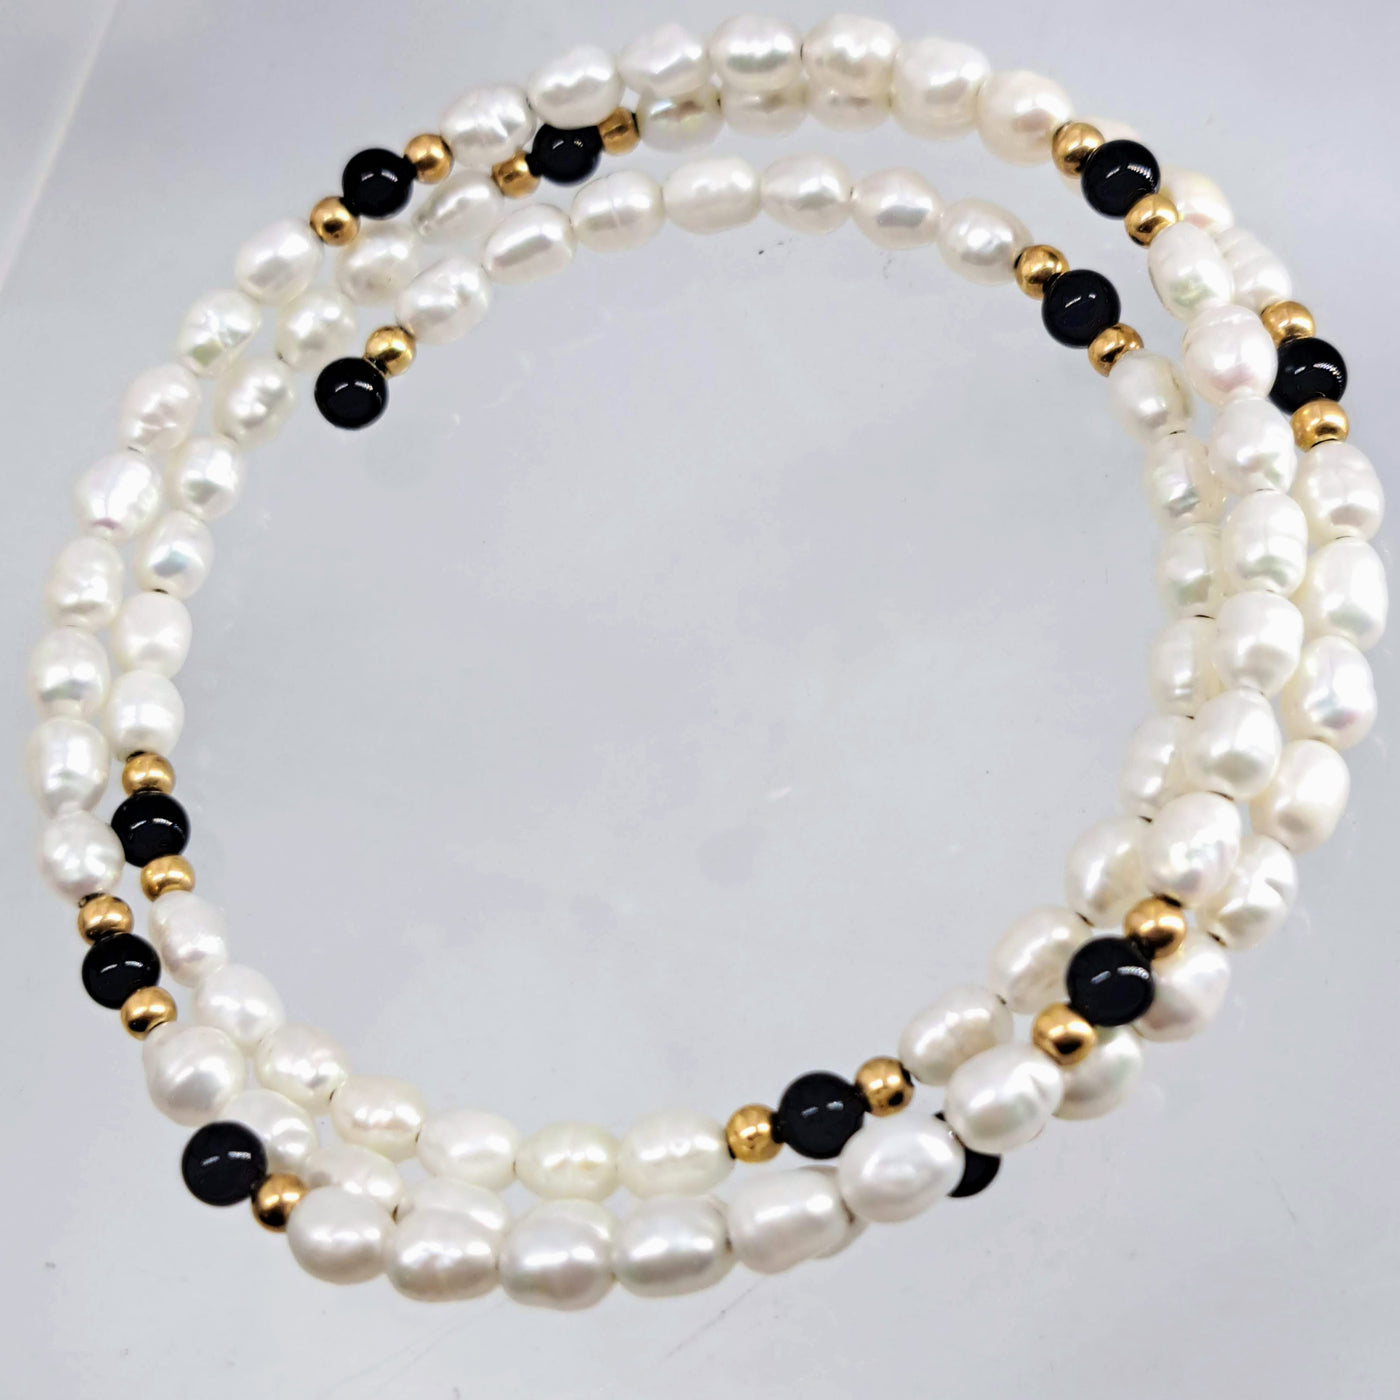 "Black & White Angel Food" Free Size Bracelet - Pearls, Onyx, 14K Gold